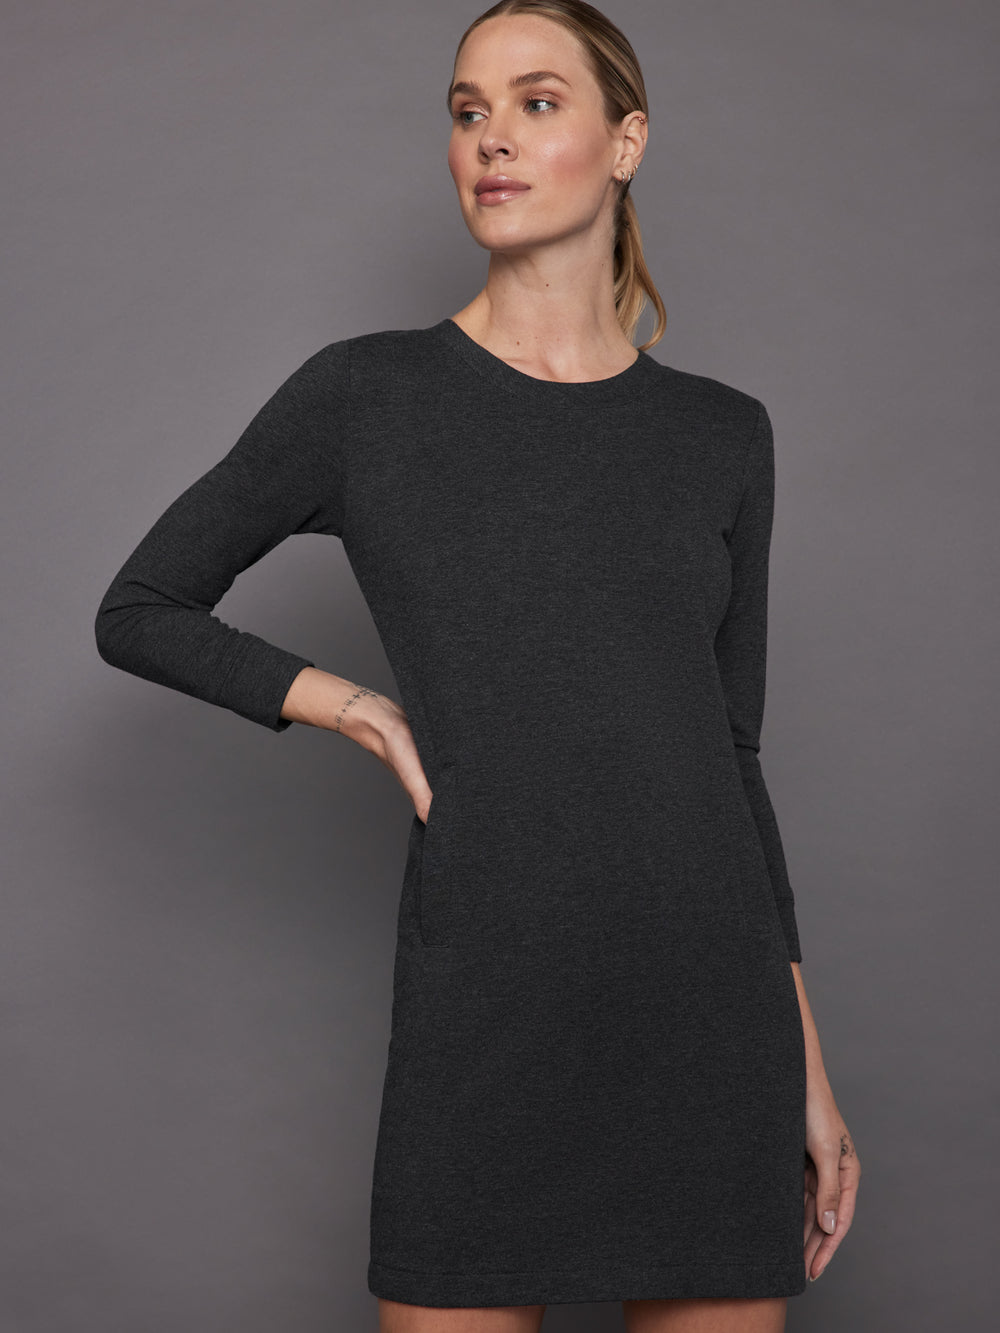 3/4 Sleeve Tailored Terry Mini Dress - Dark Heather Grey